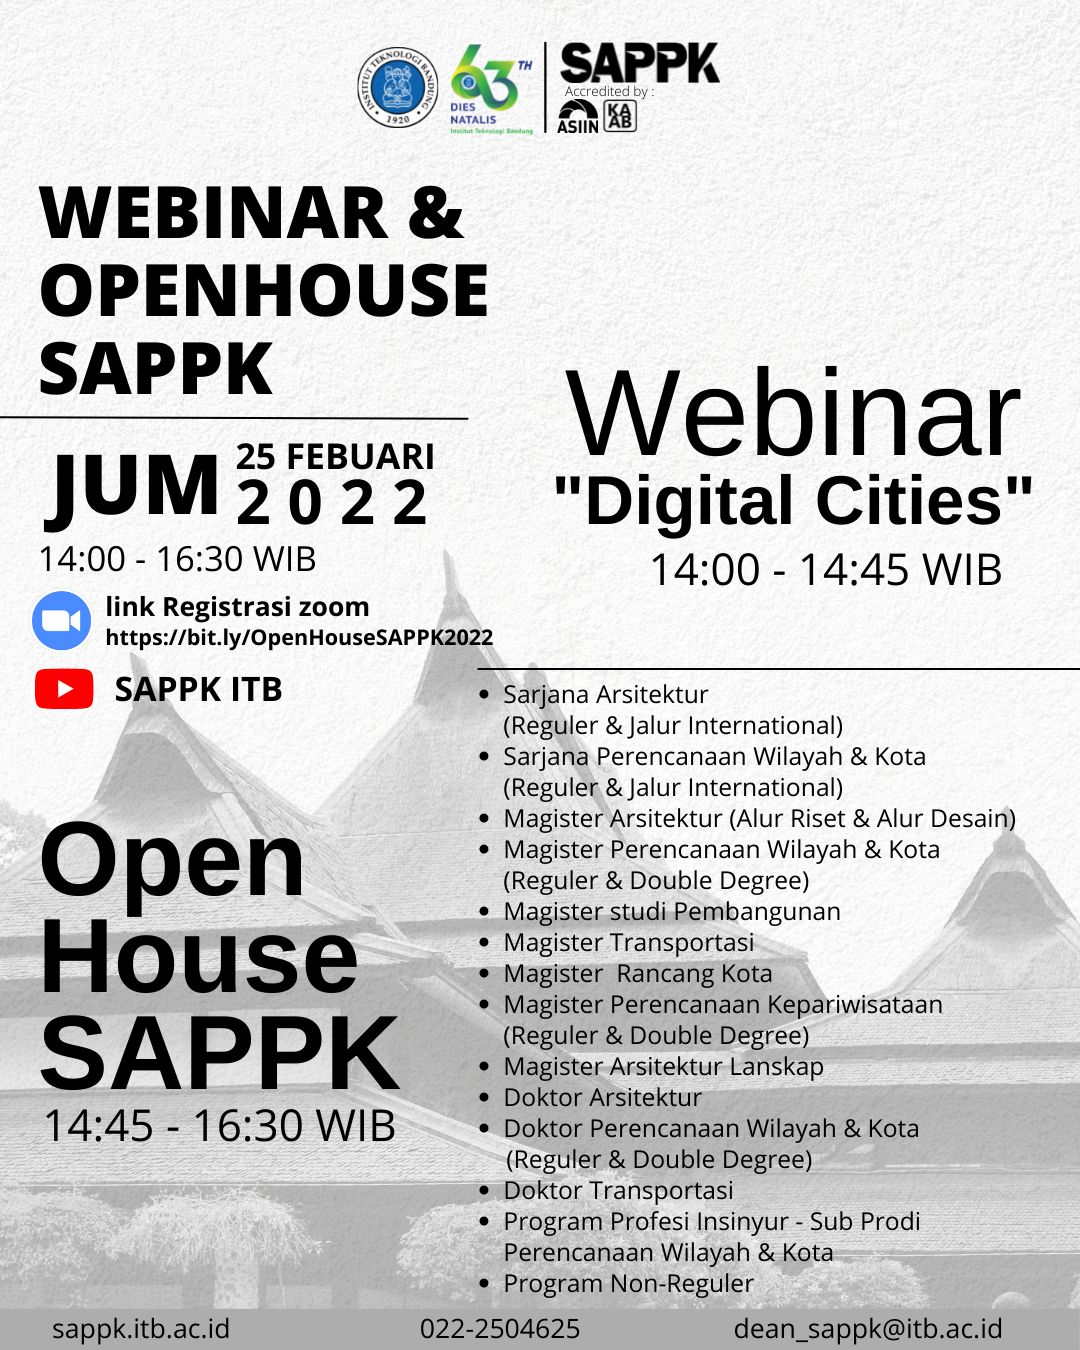 Webinar & Open House SAPPK “Digital Cities”